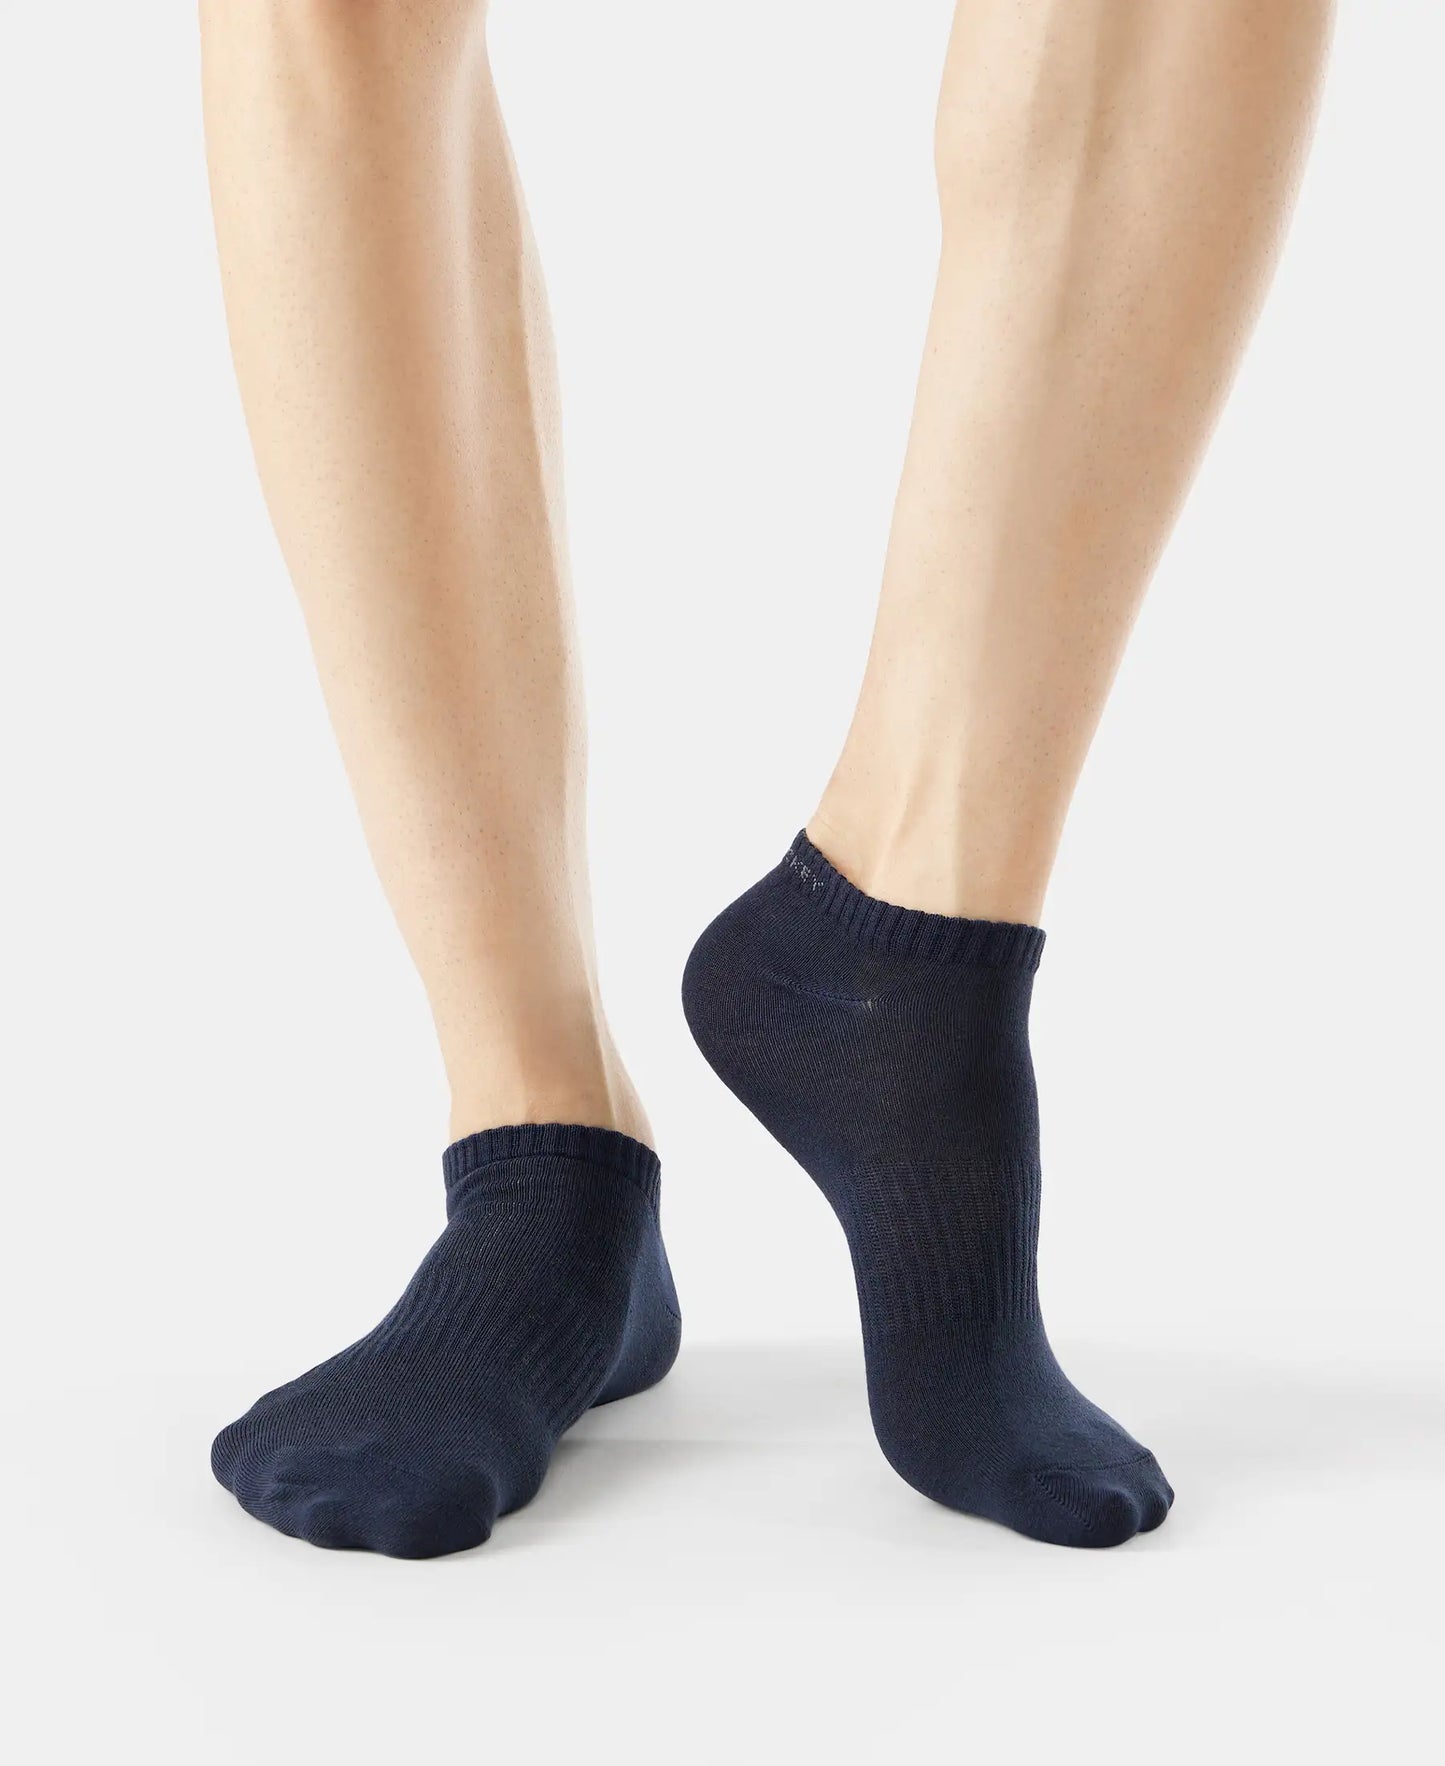 Compact Cotton Low Show Socks With StayFresh Treatment - Black/Grey Melange/Navy Melange-3